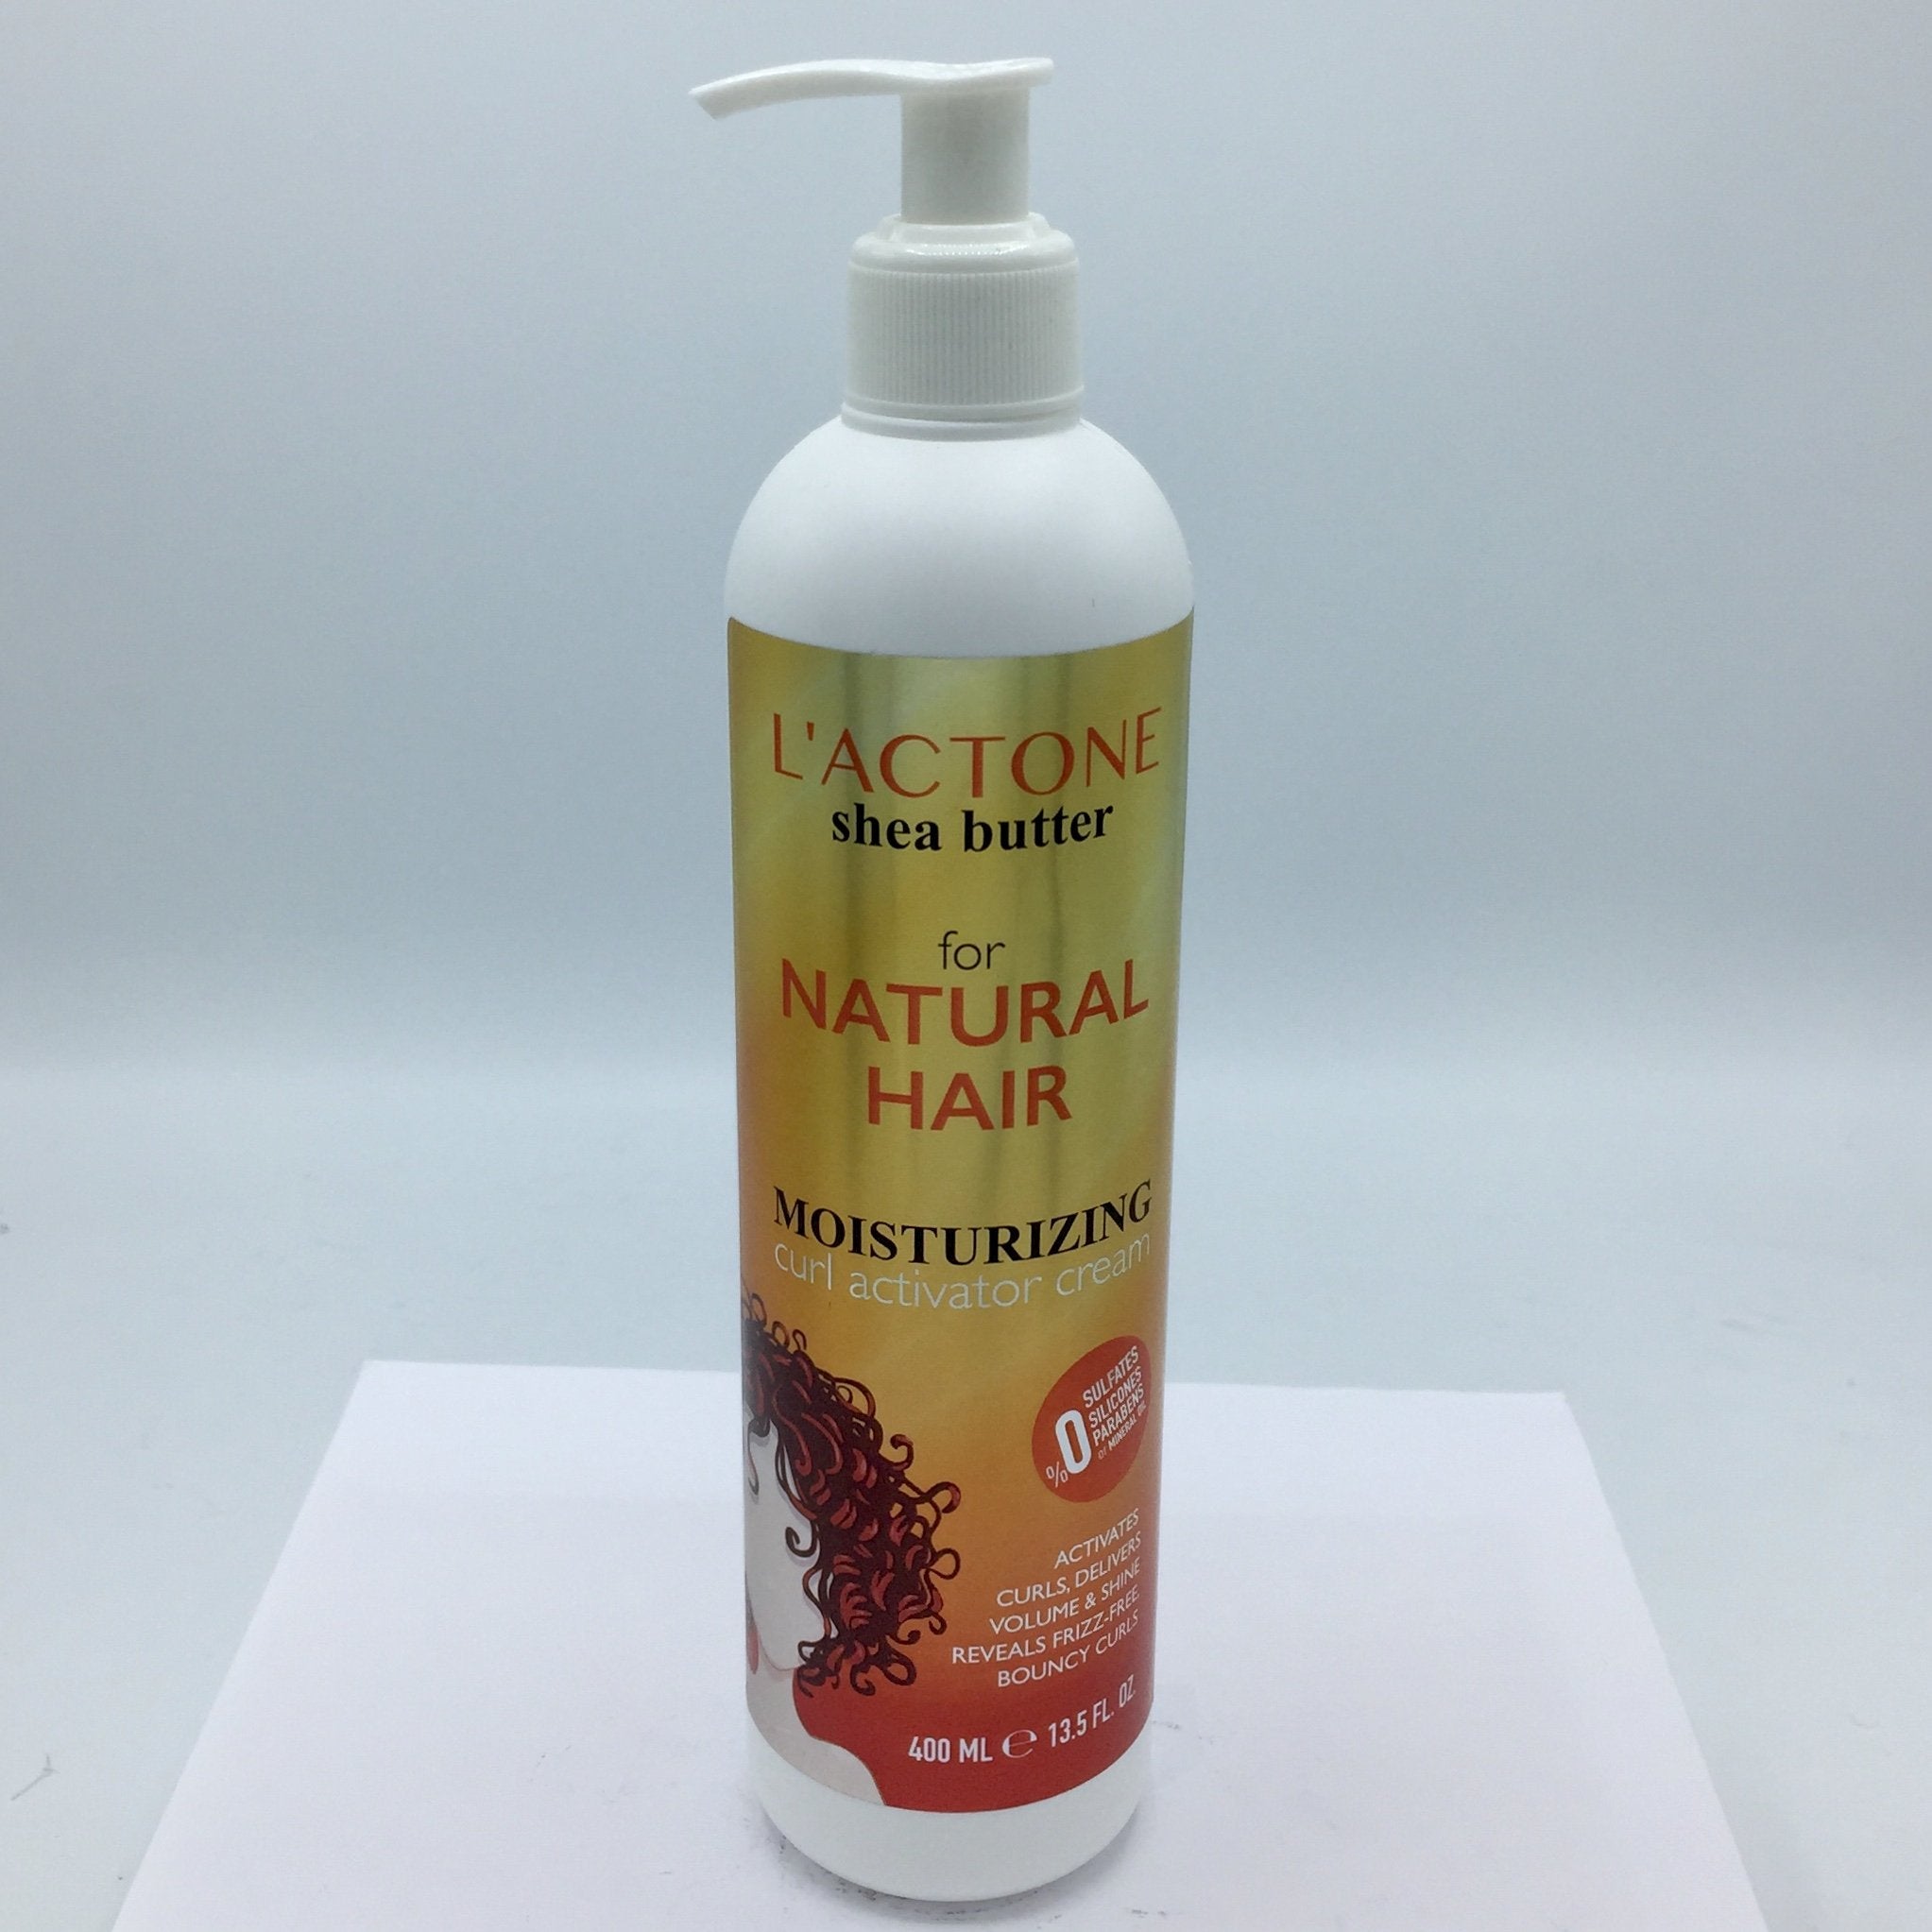 GuissyGlam™ Natural Hair Curl Activator Cream 400ml - GuissyGlam